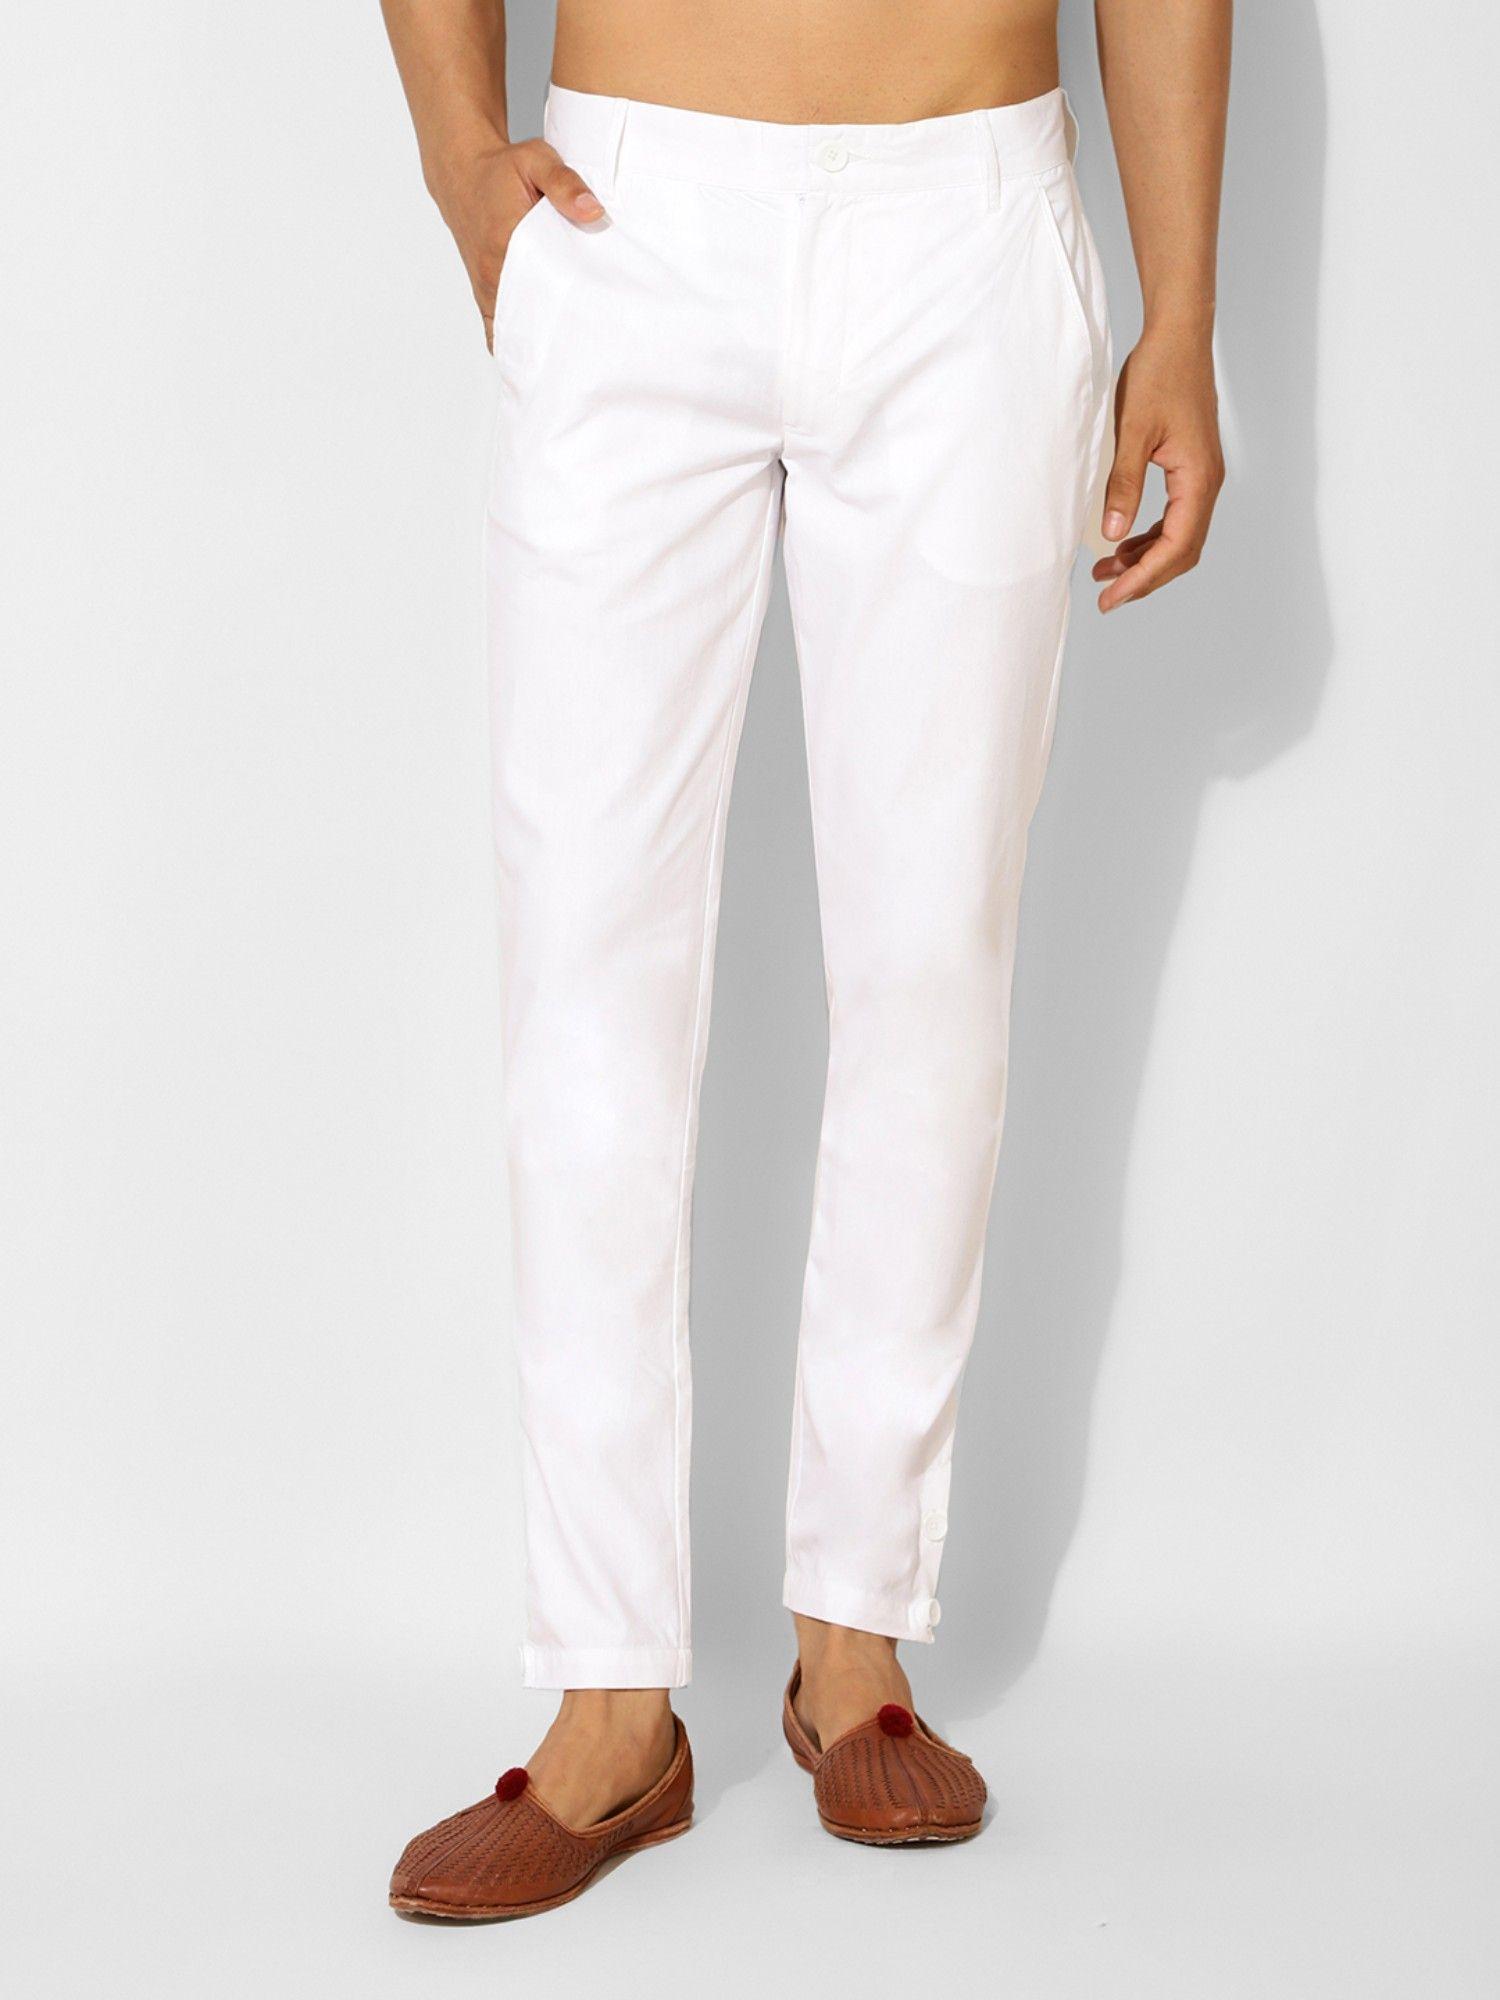 solid white cotton pyjama